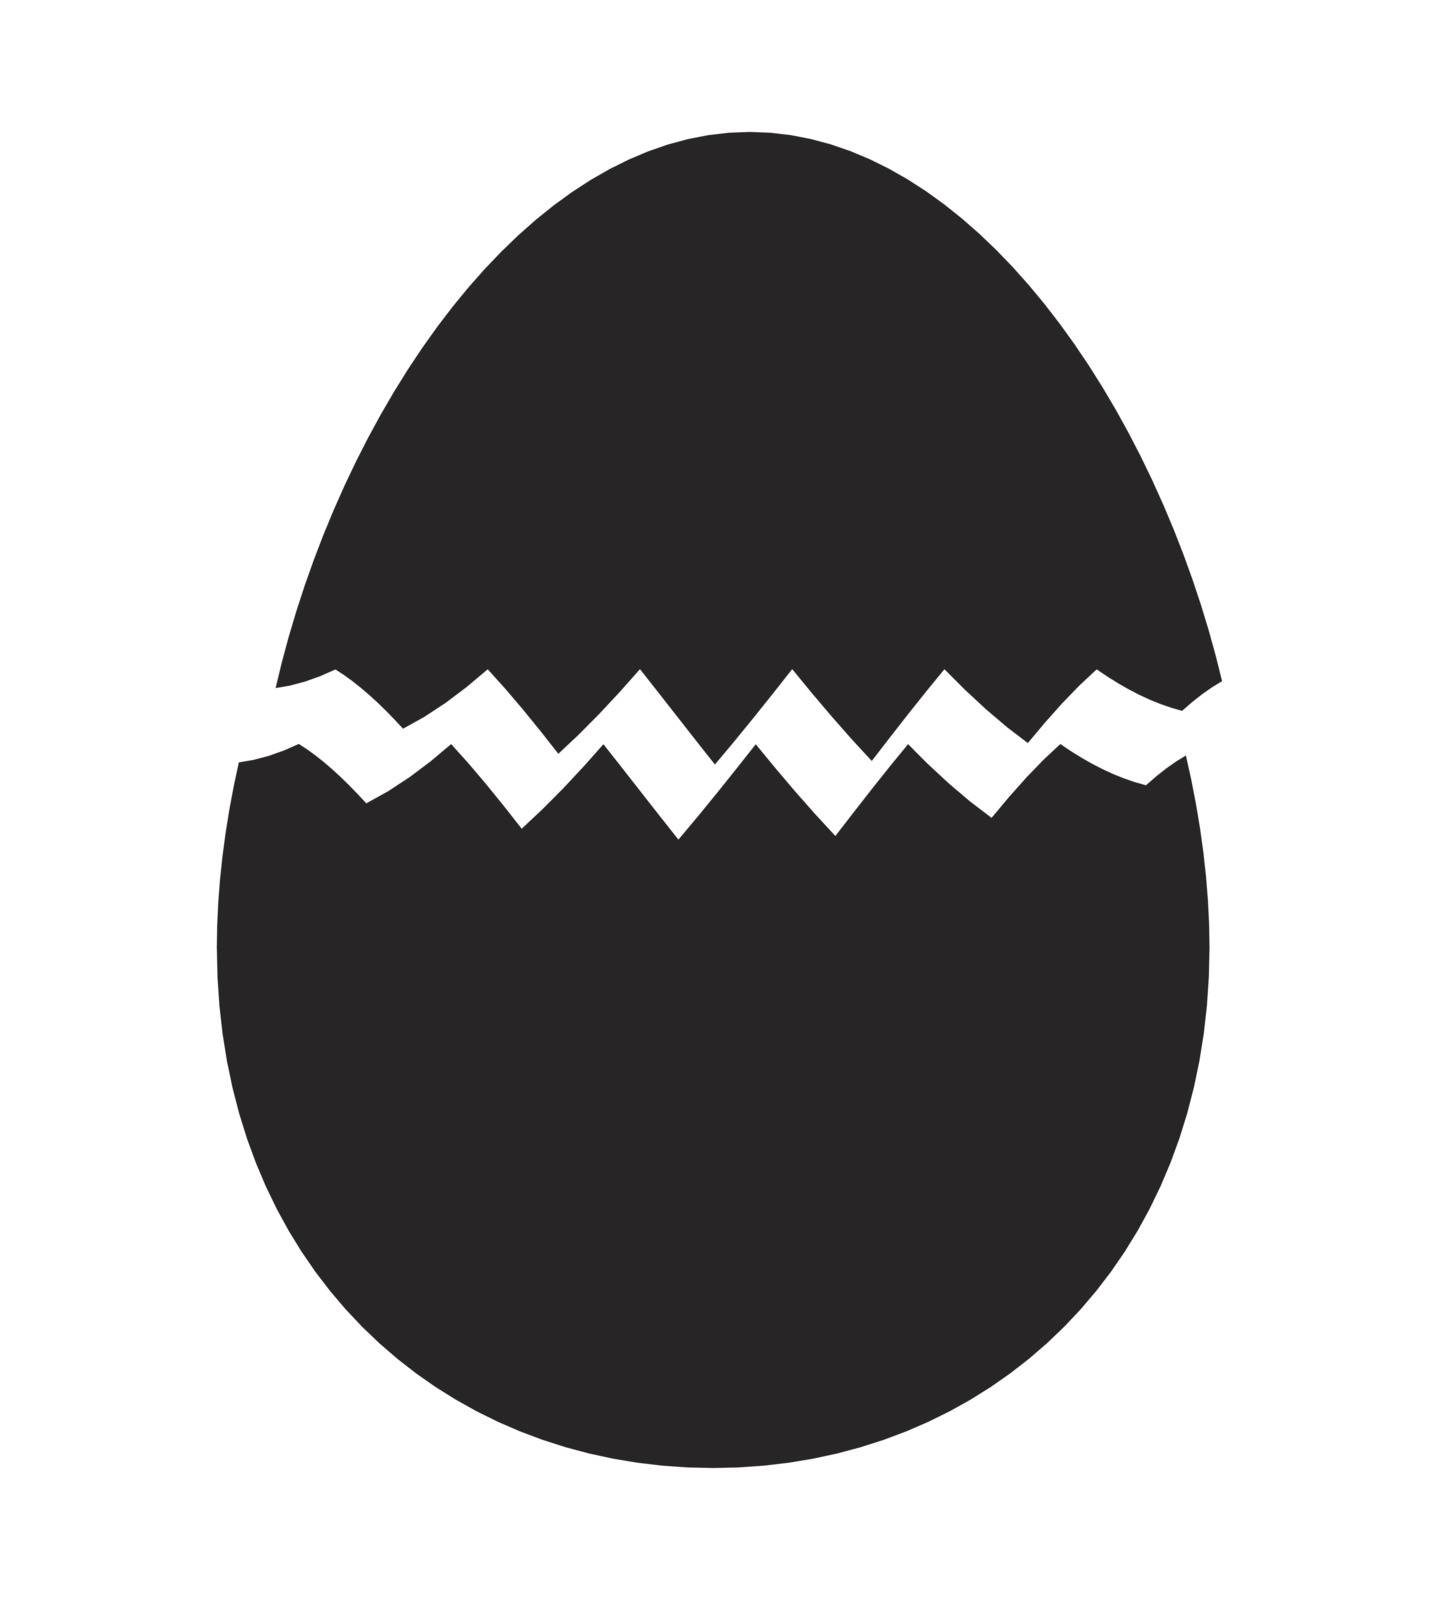 broken egg silhouette vector symbol icon design. Beautiful illustration isolated on white background
